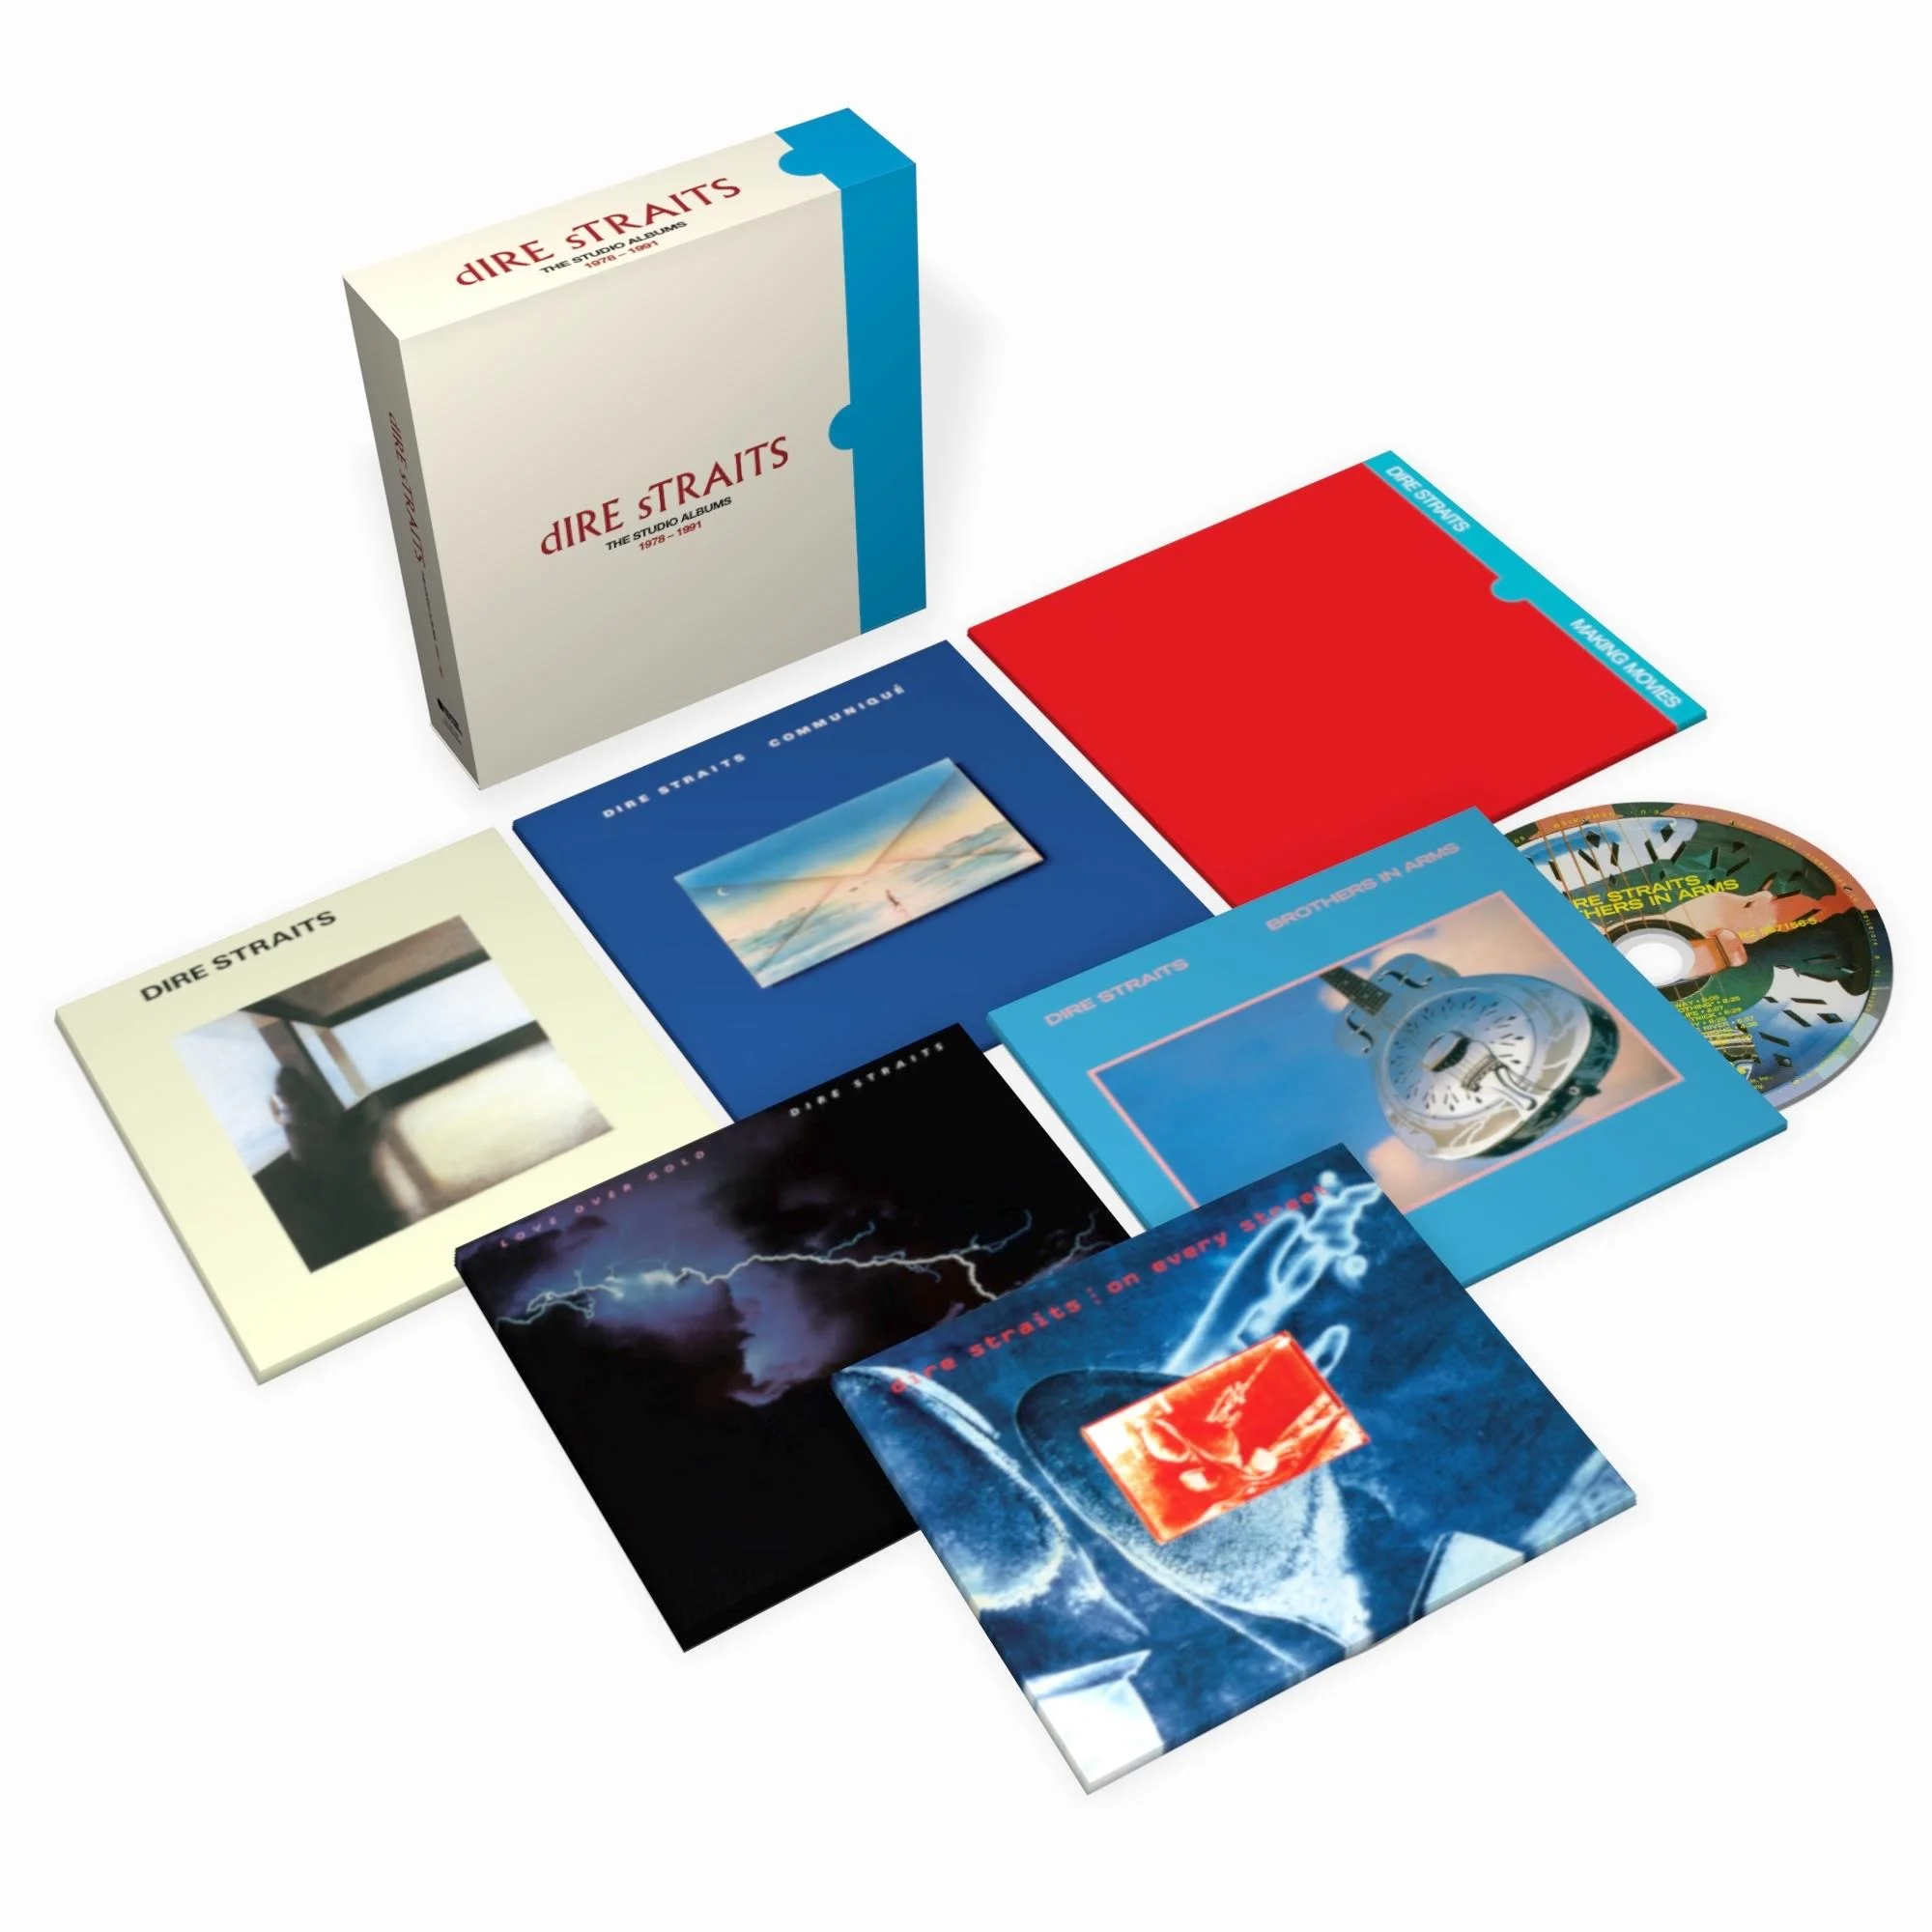 Dire Straits: The Studio Albums